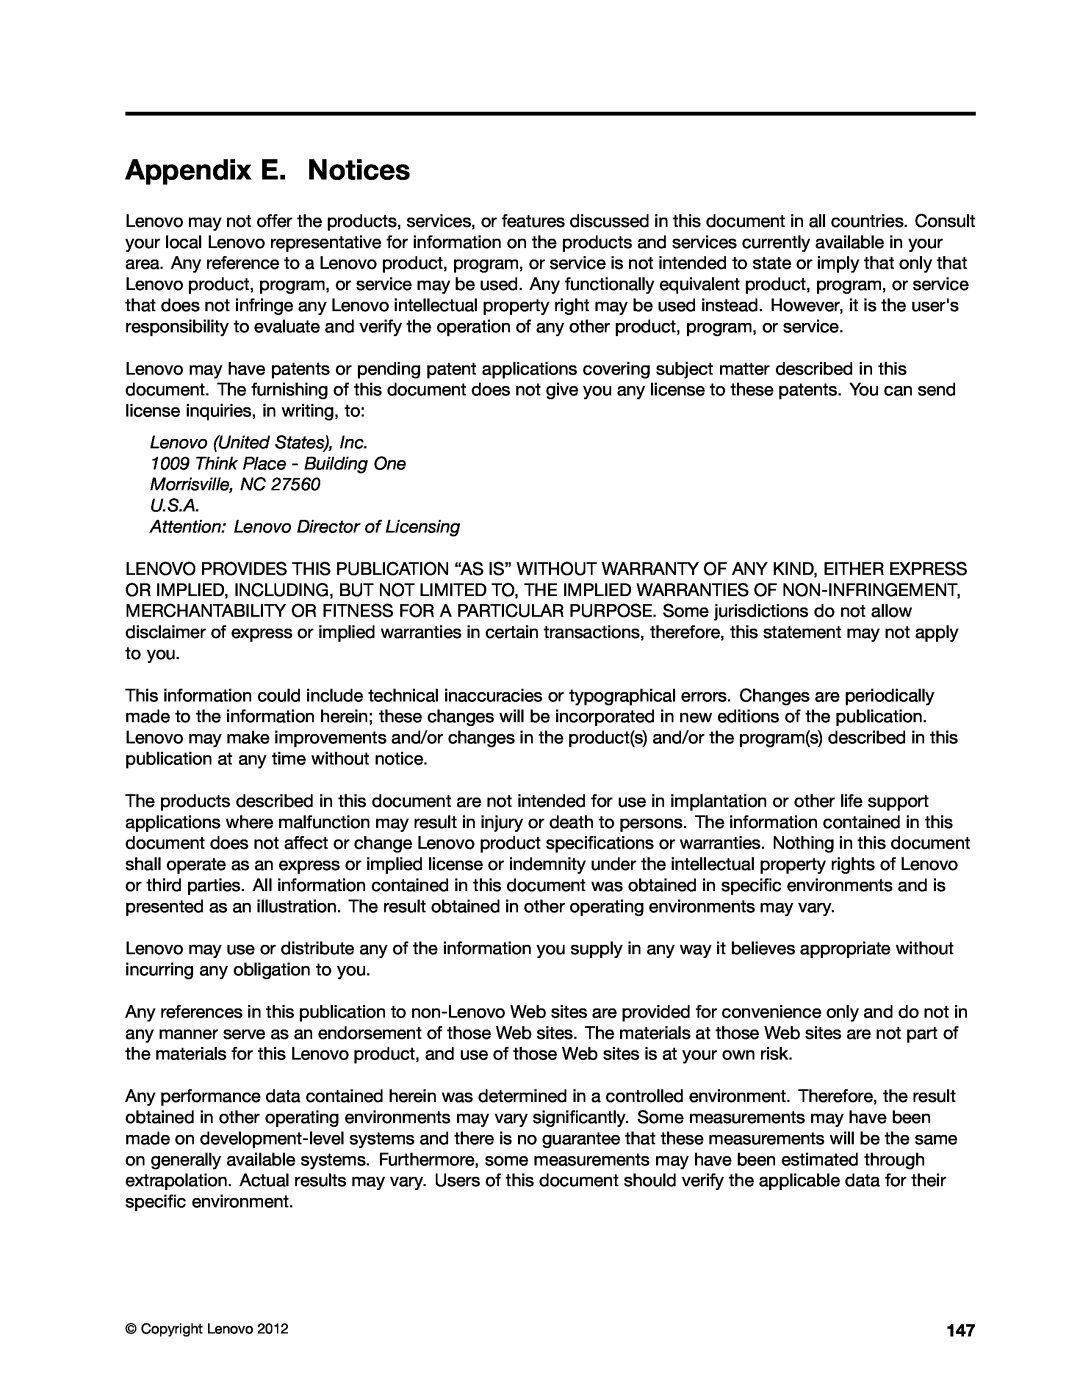 Lenovo X131E manual Appendix E. Notices, Lenovo United States, Inc 1009 Think Place - Building One 